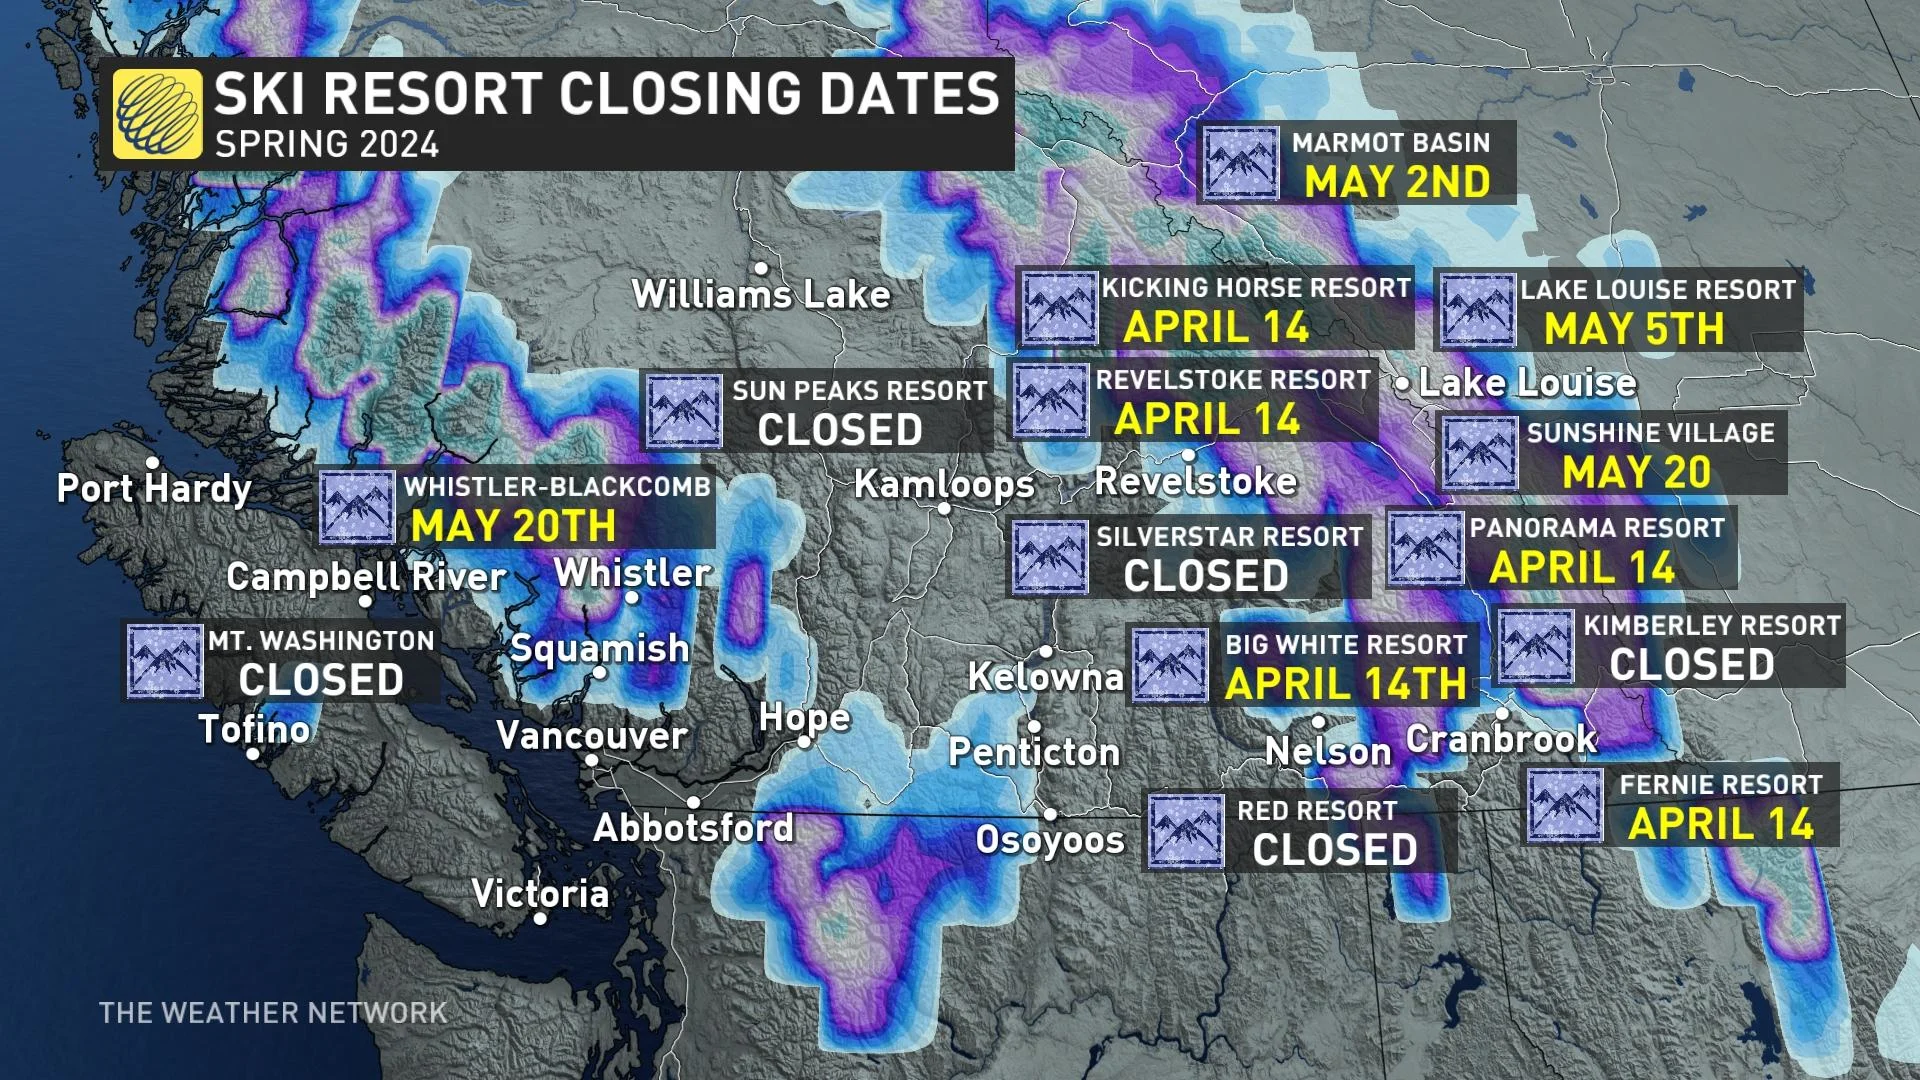 Ski resort closing dates in Western Canada, April 10